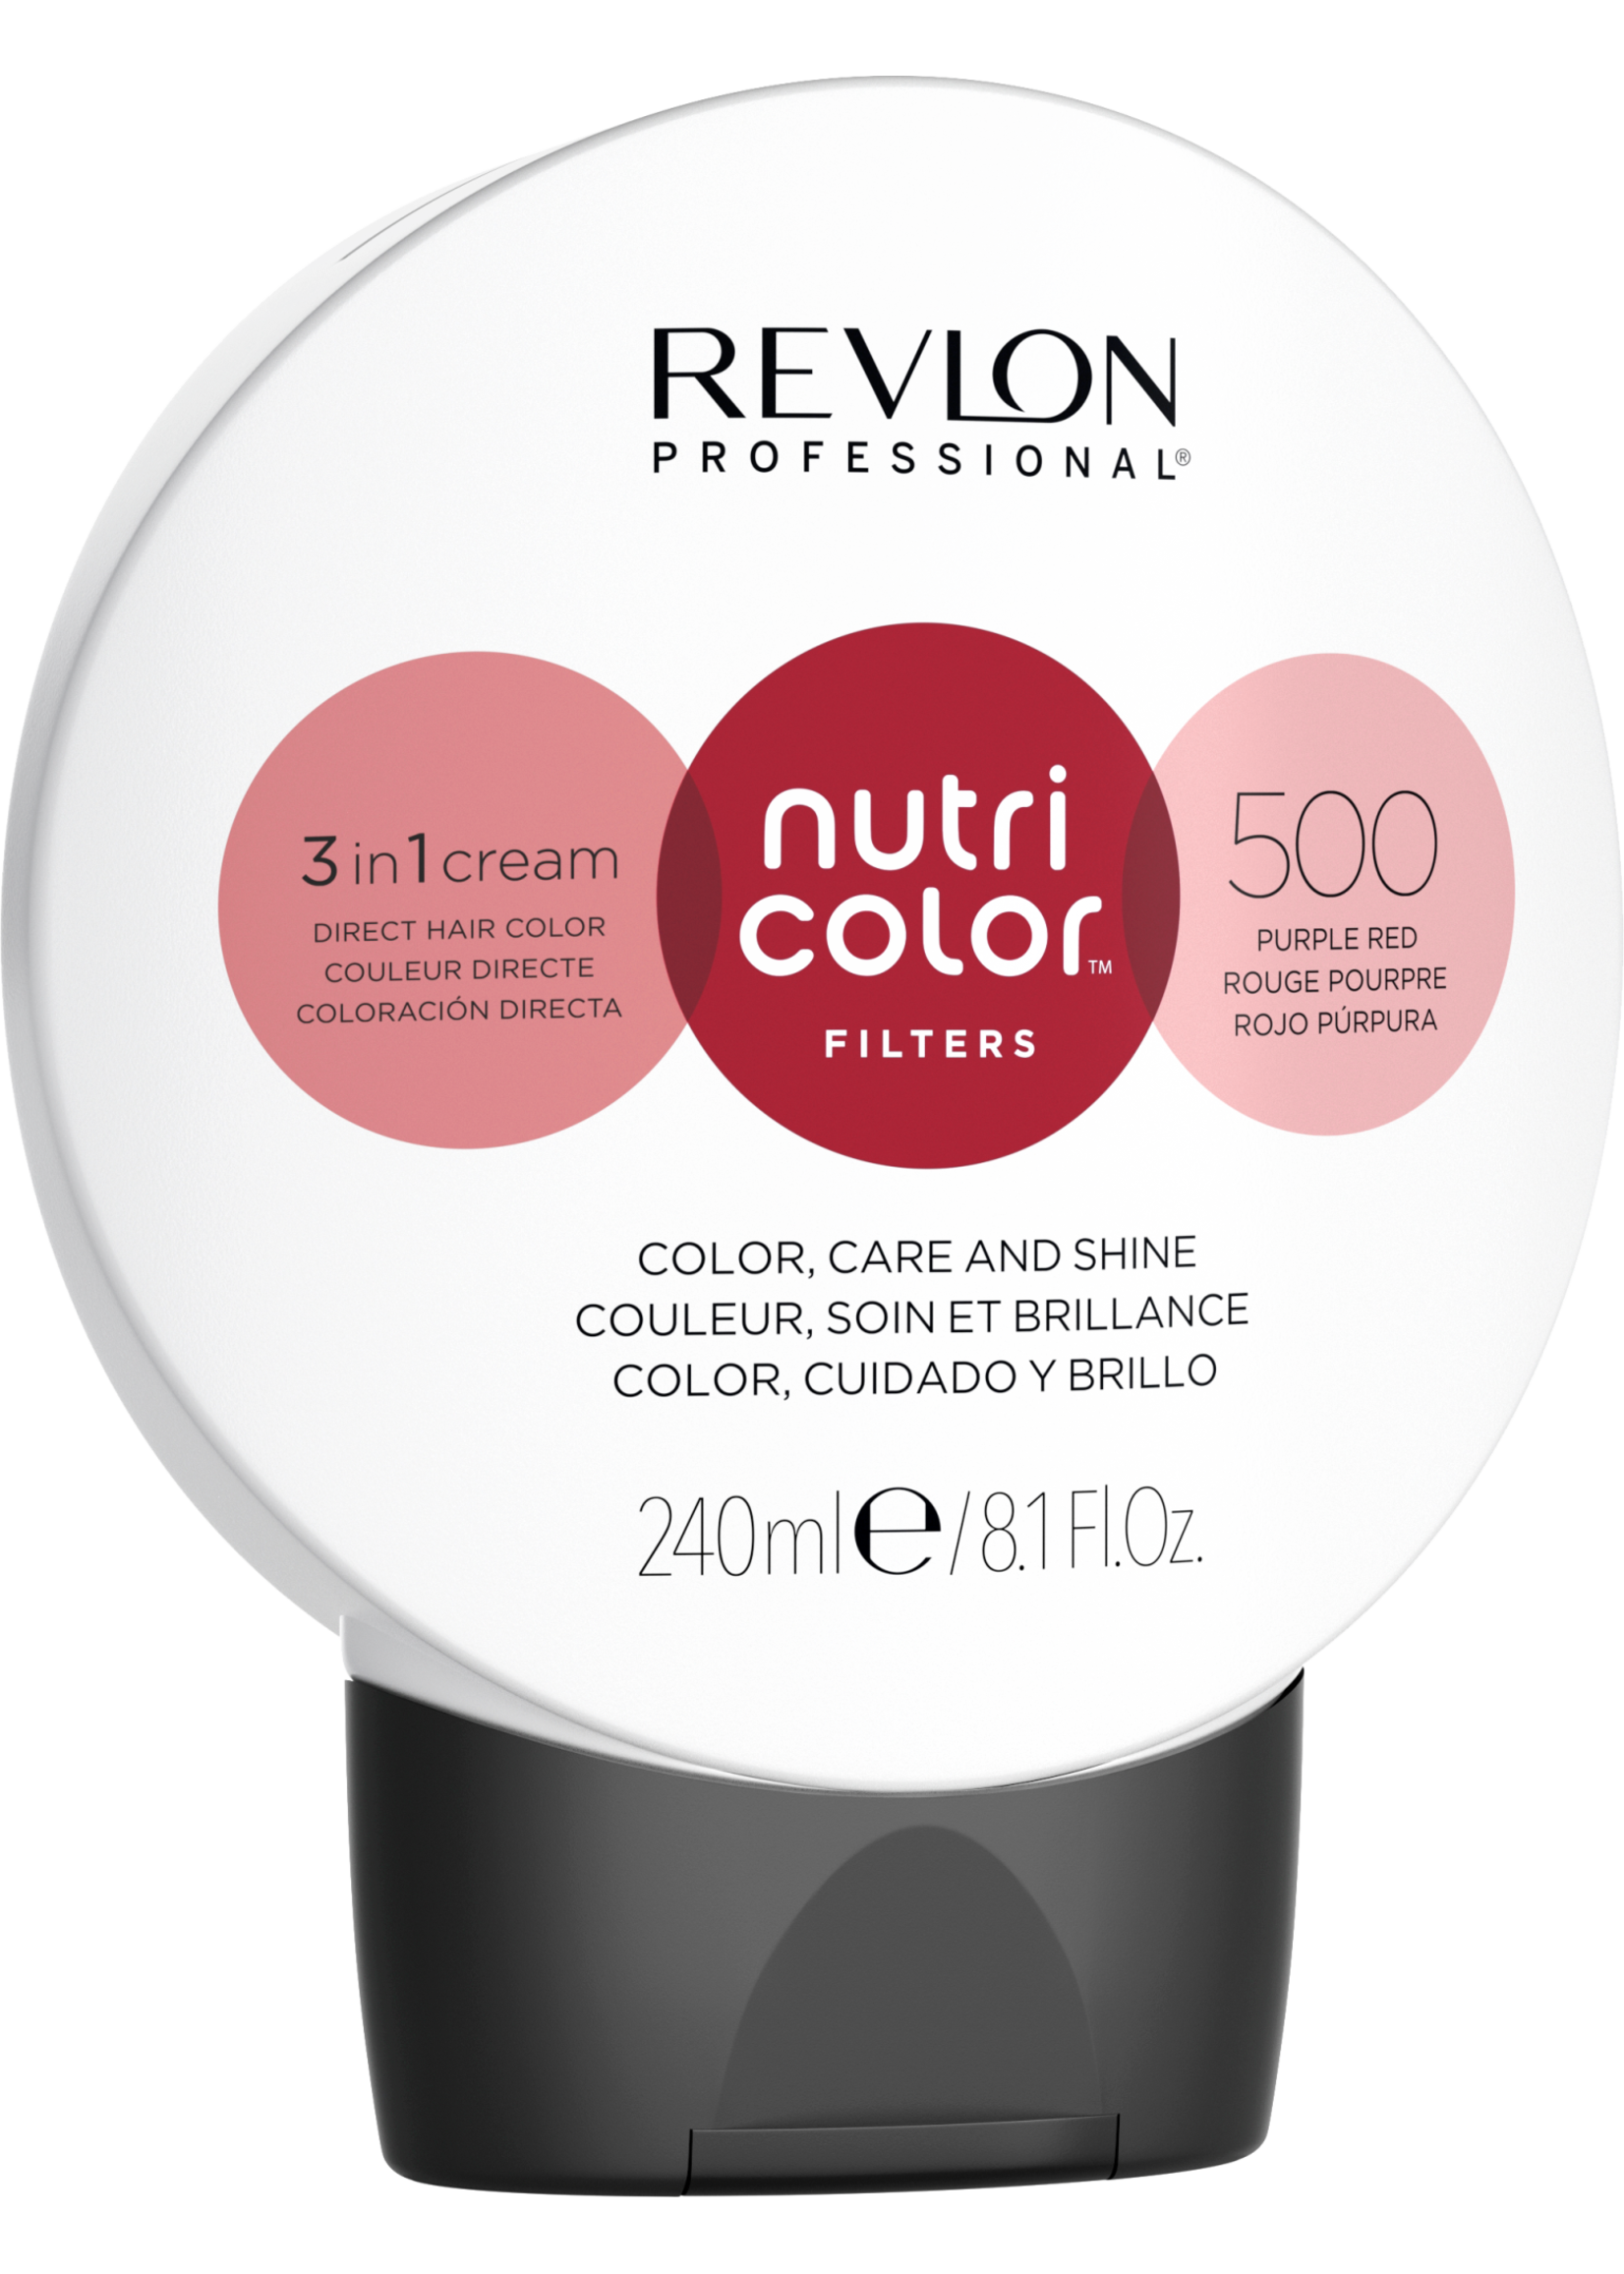 Revlon Professional Revlon Professional Nutri Color Filters 500 Purple Red 240ml